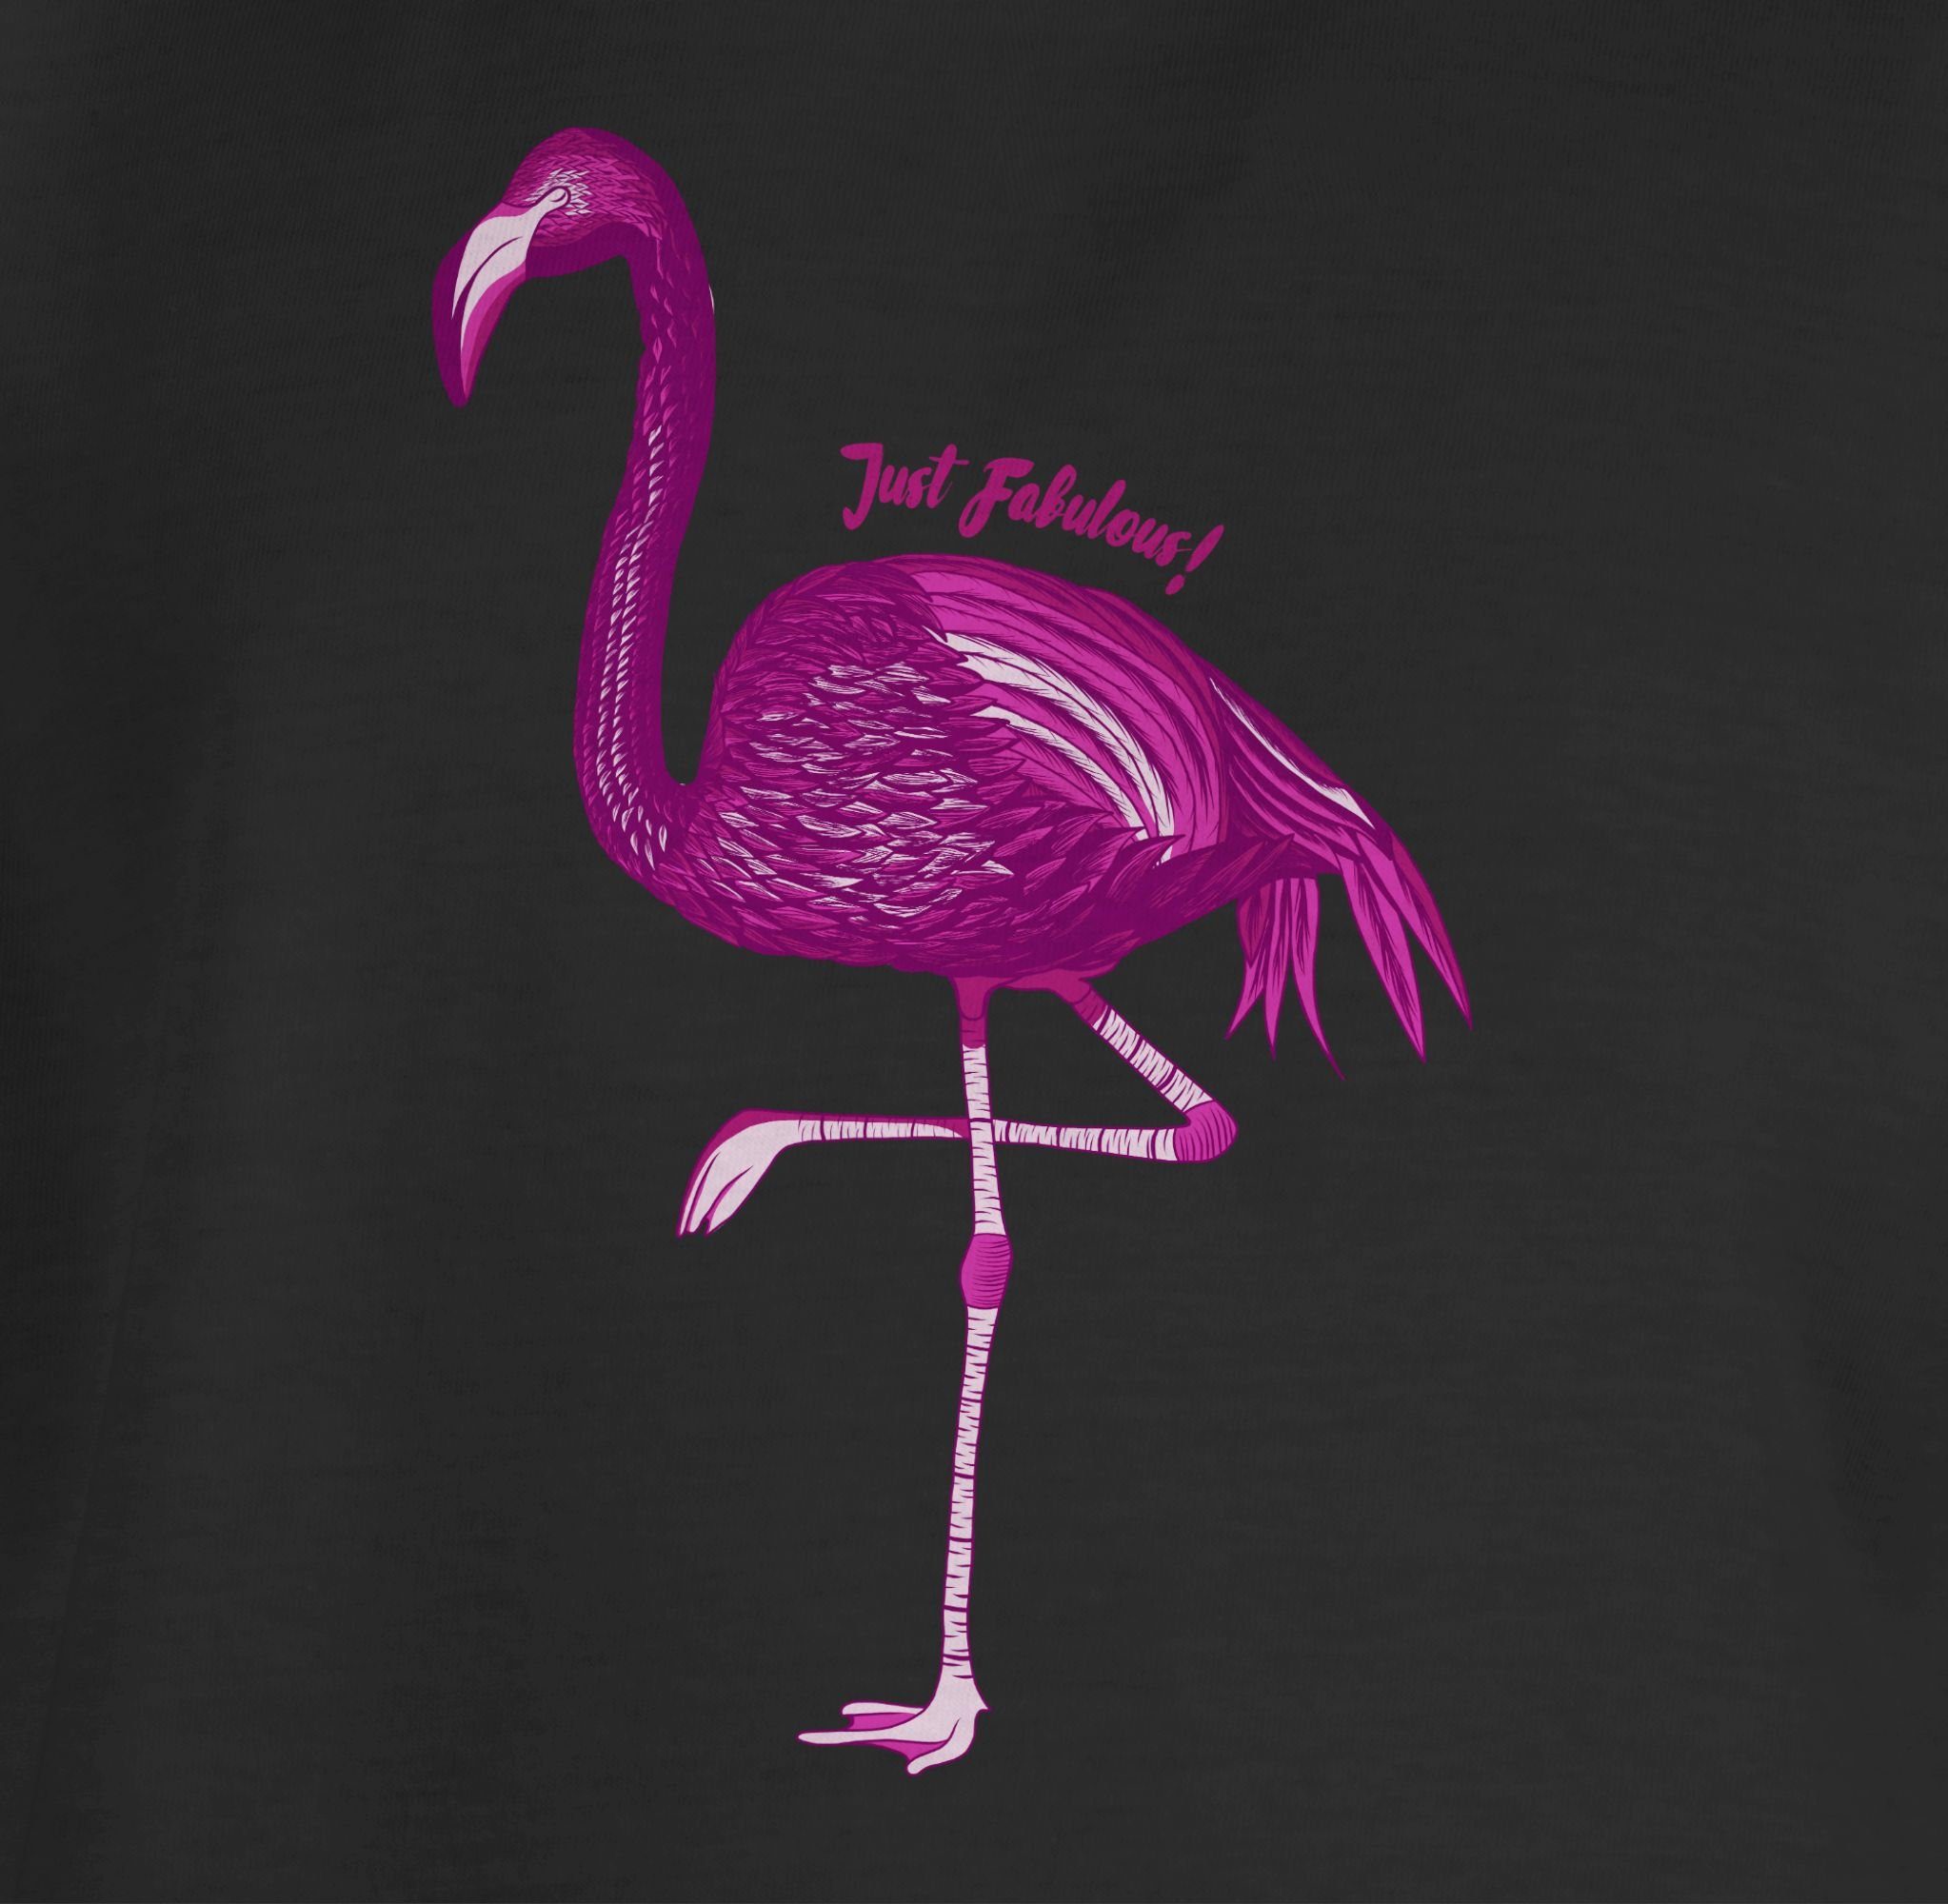 Schwarz Shirtracer 3 - Just Flamingo Tiermotiv T-Shirt Animal Fabulous Print